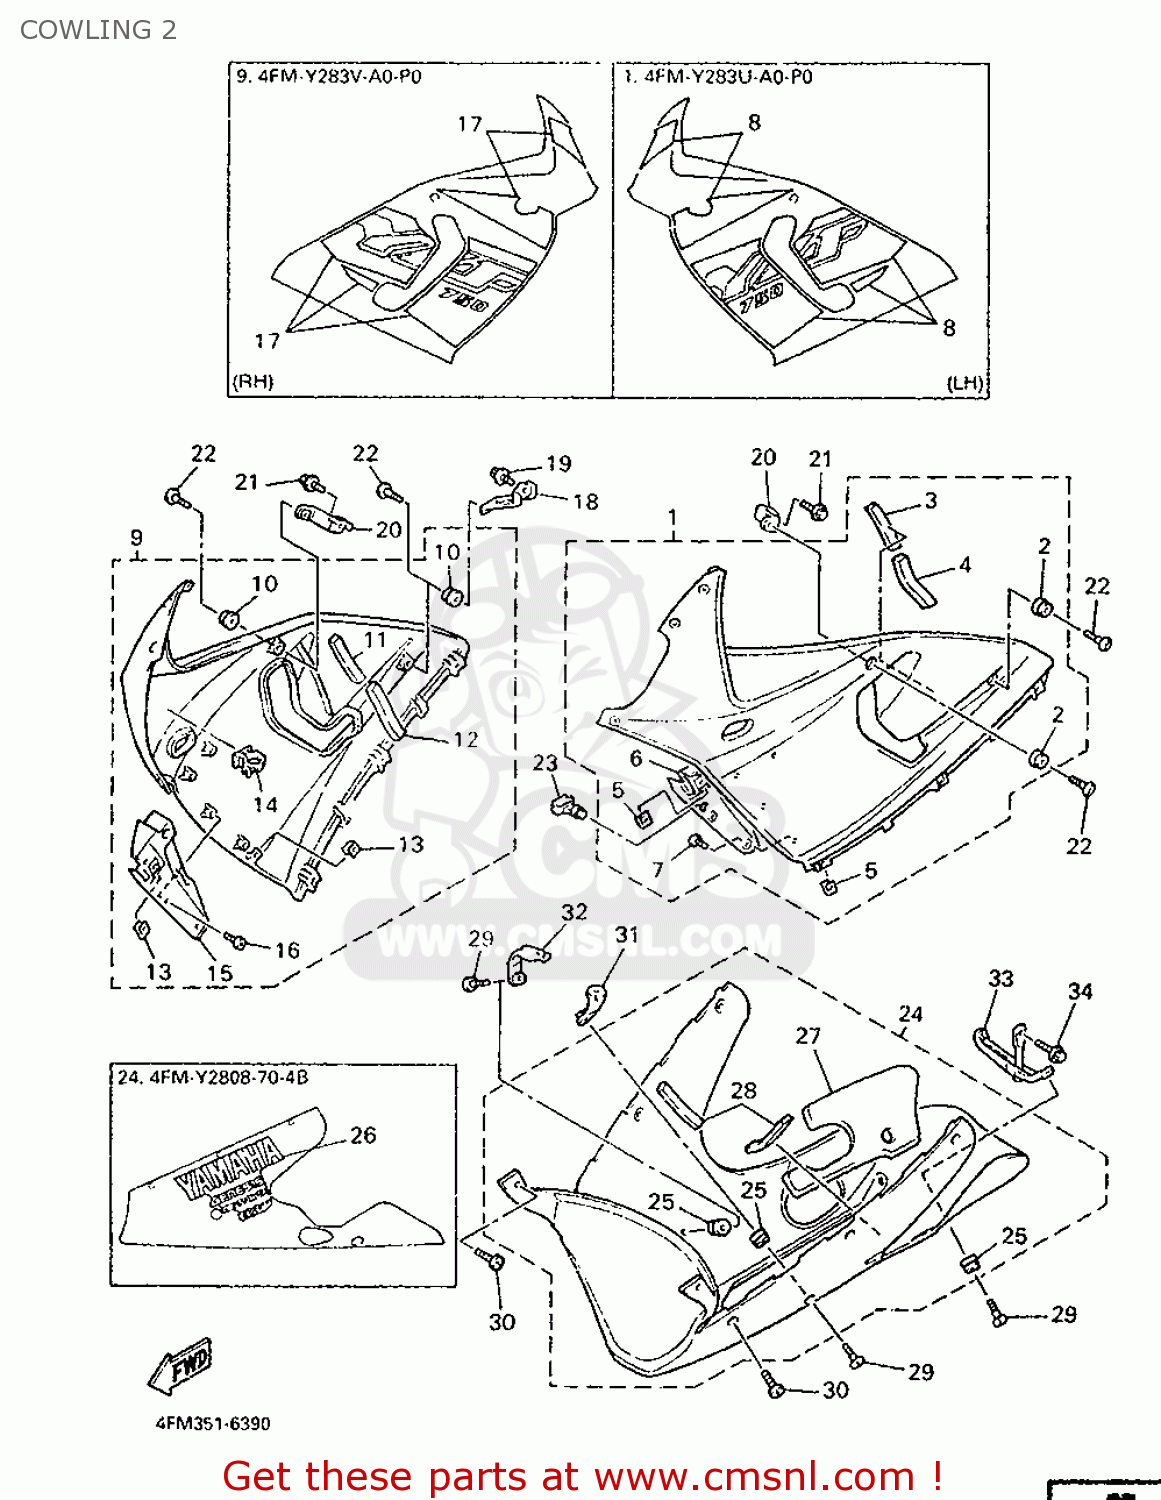 fj1100 wiring diagram